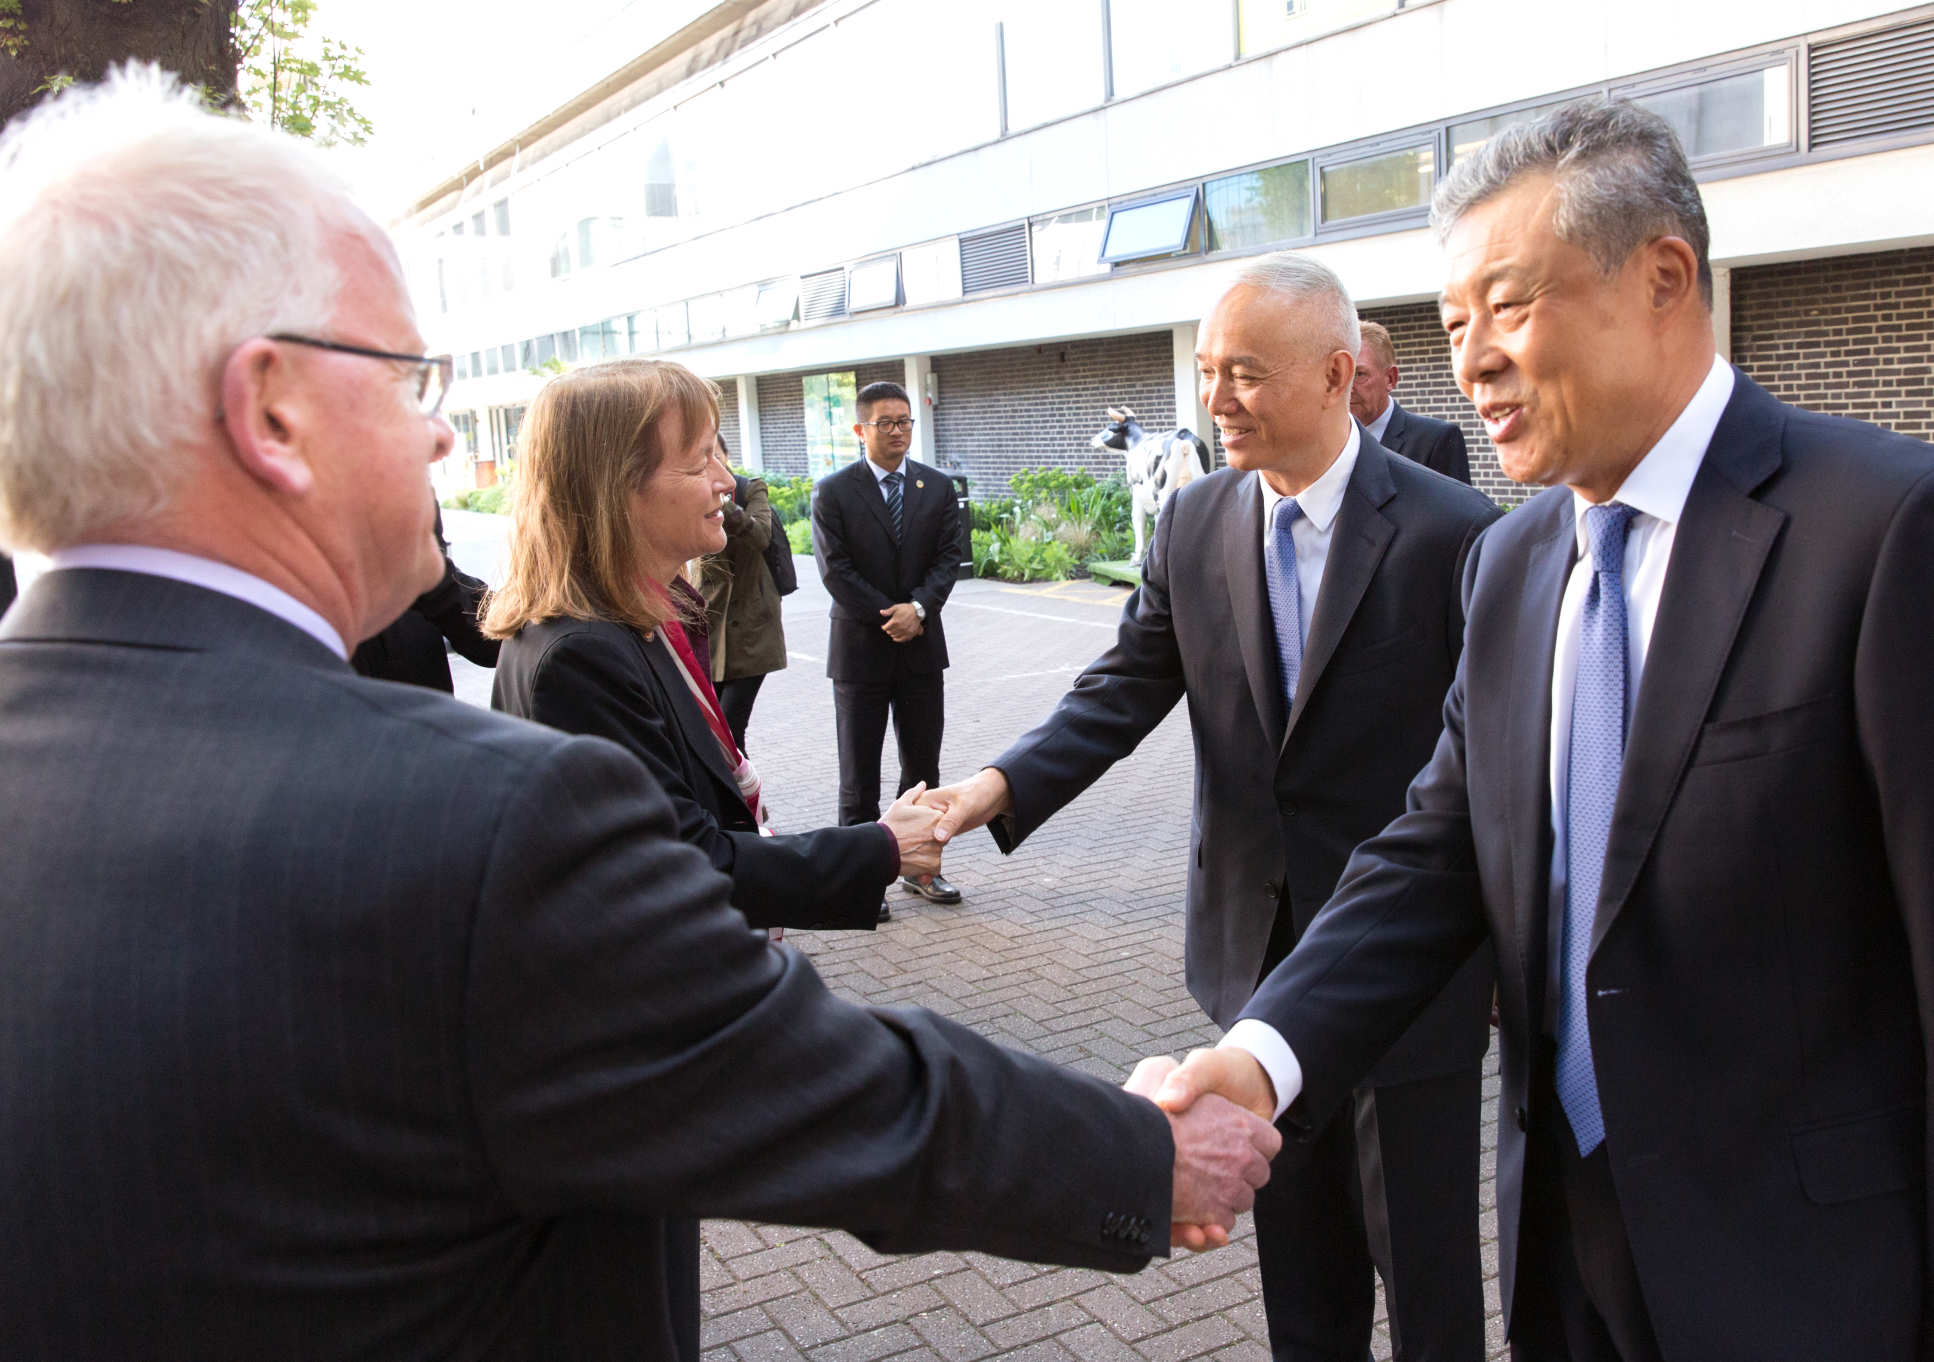 Mr Cai was accompanied by China’s Ambassador to the United Kingdom Liu Xiaoming